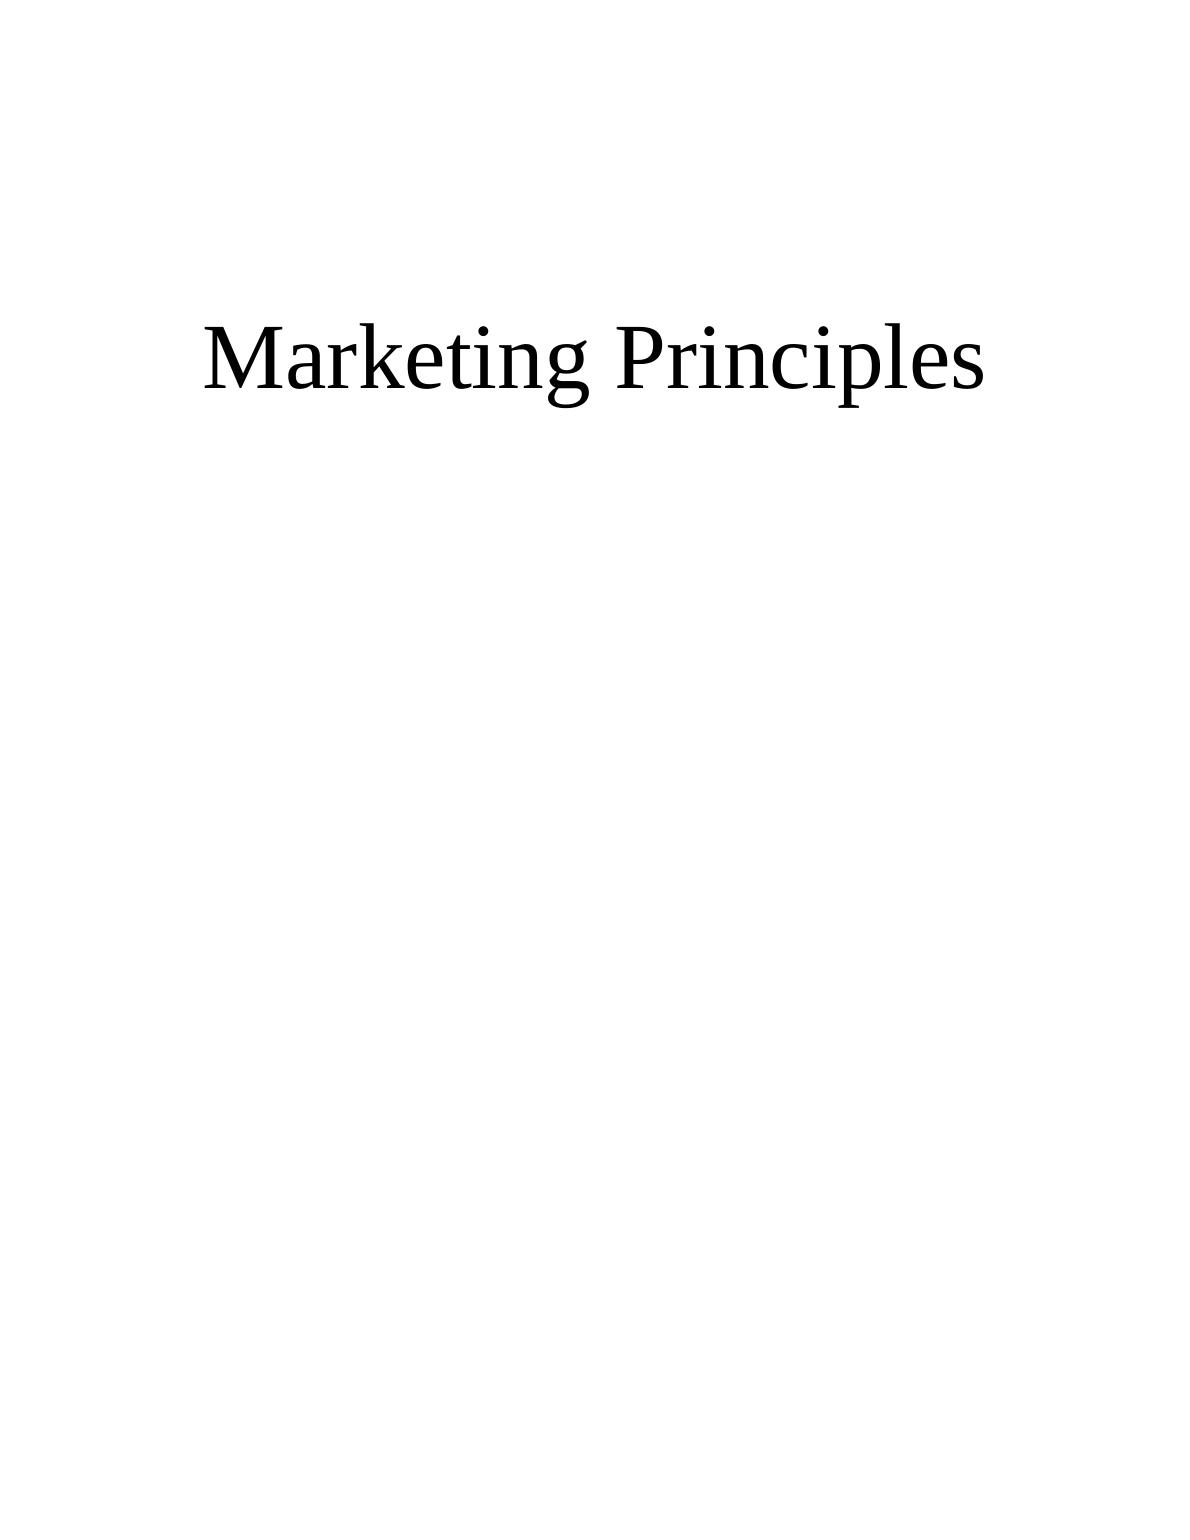 Principles of marketing principles_1